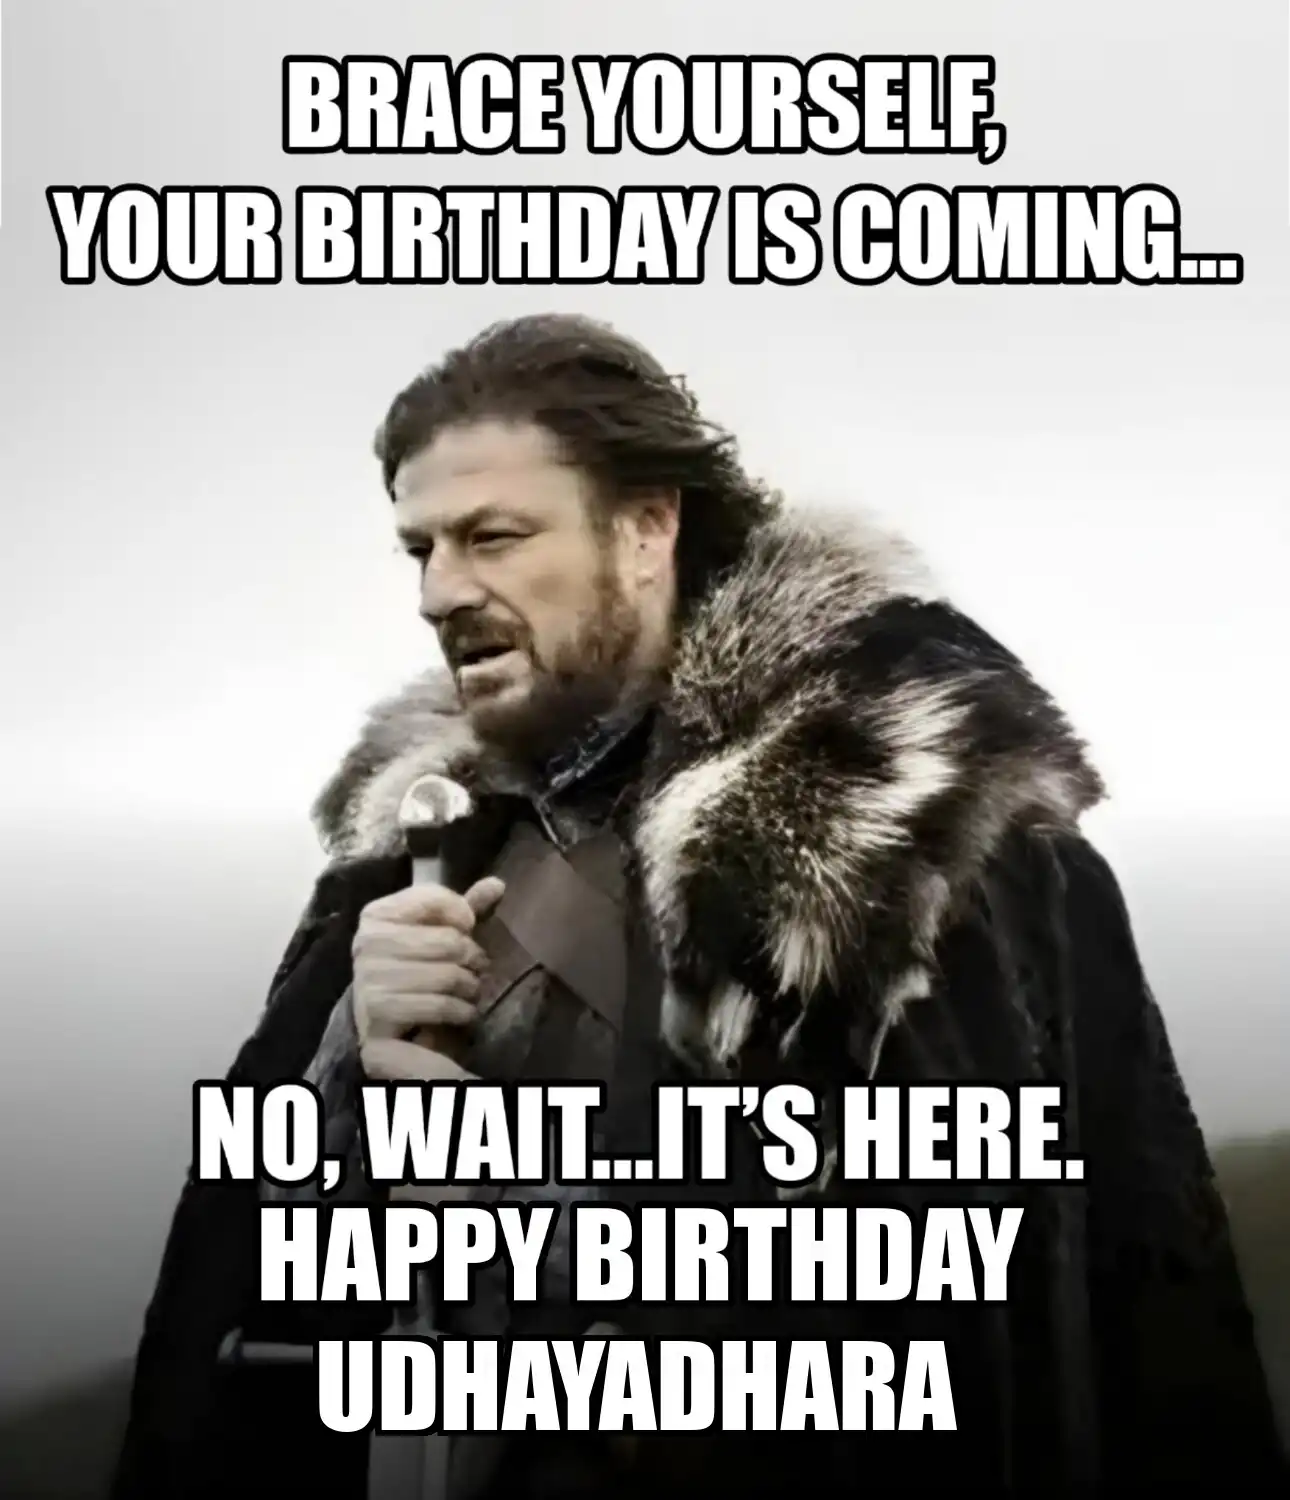 Happy Birthday Udhayadhara Brace Yourself Your Birthday Is Coming Meme